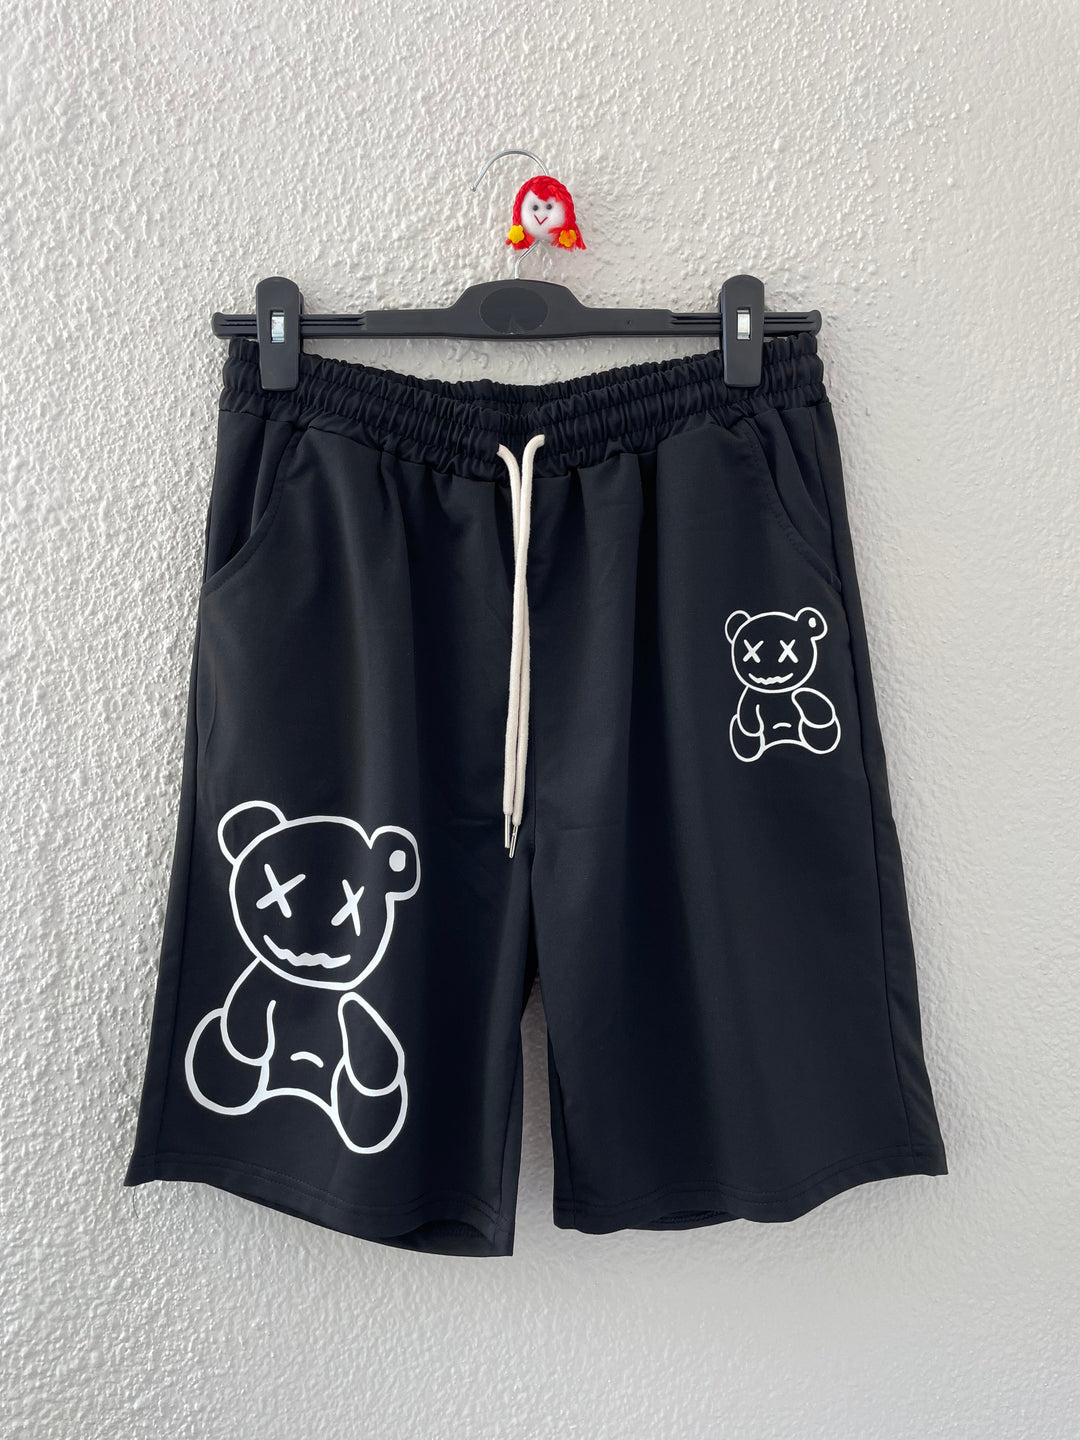 Image of Black "teddy" shorts